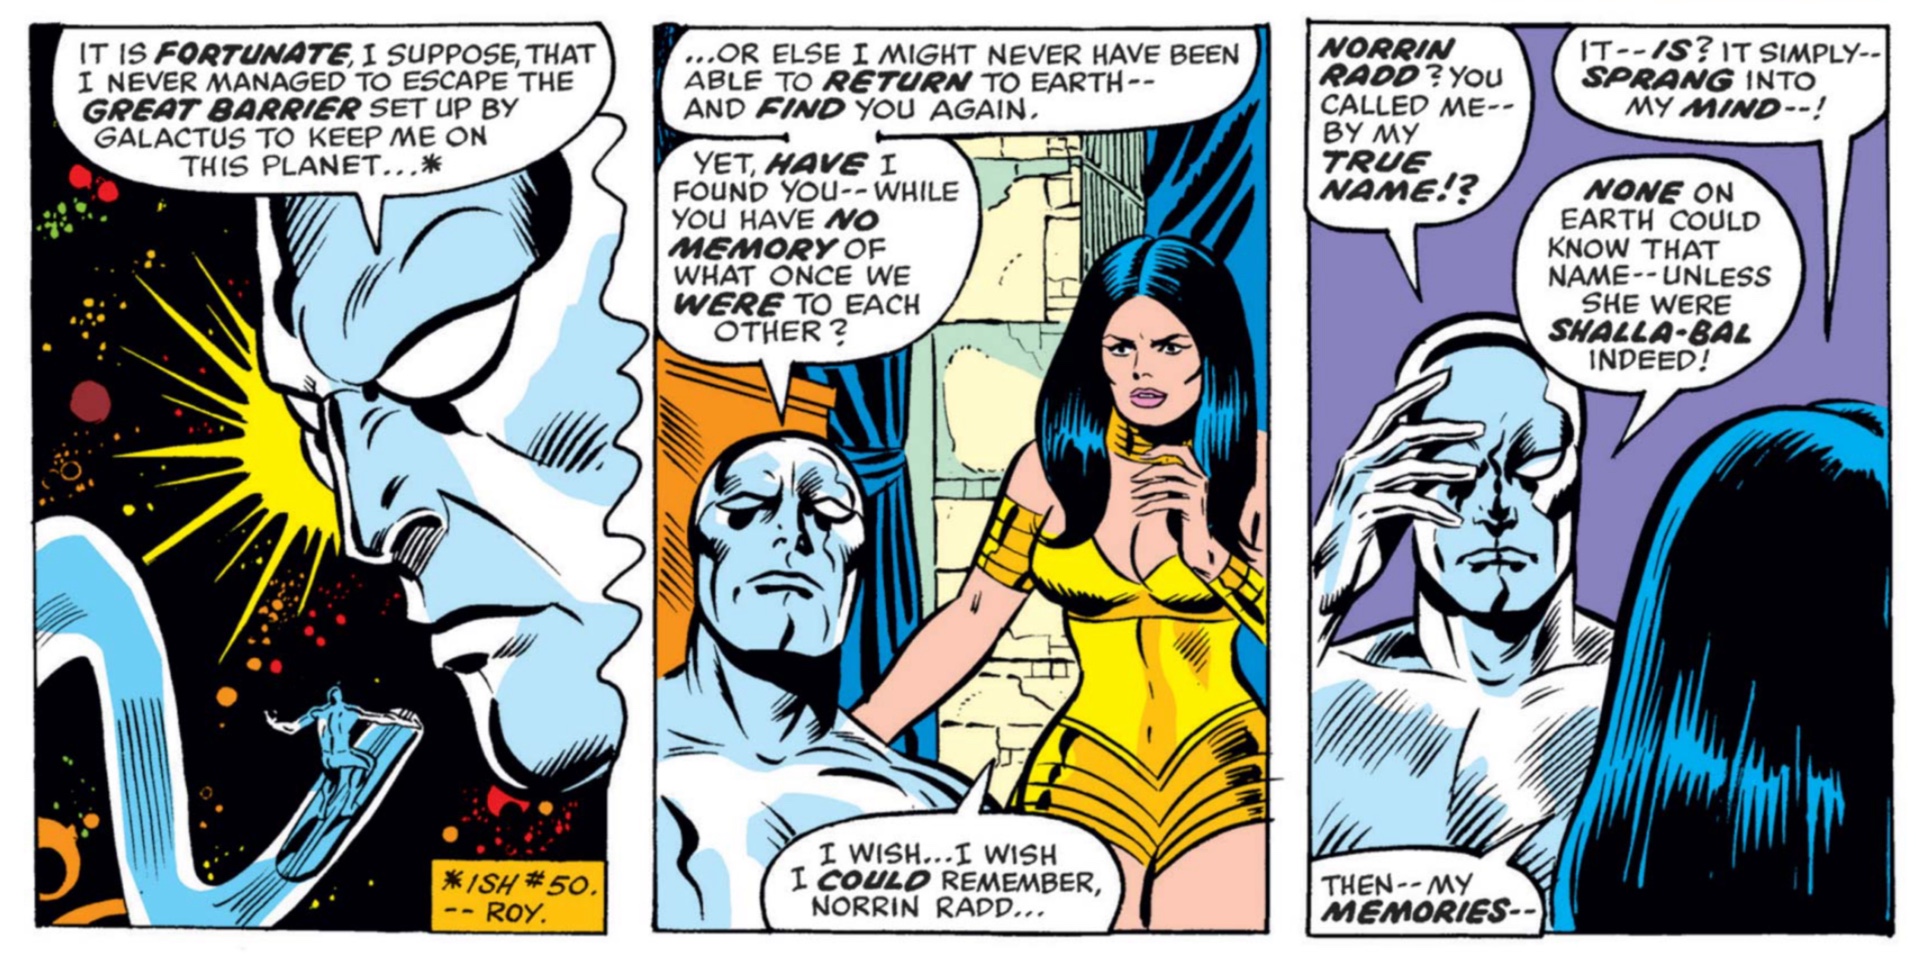 Shalla-Bal in Marvel Comics